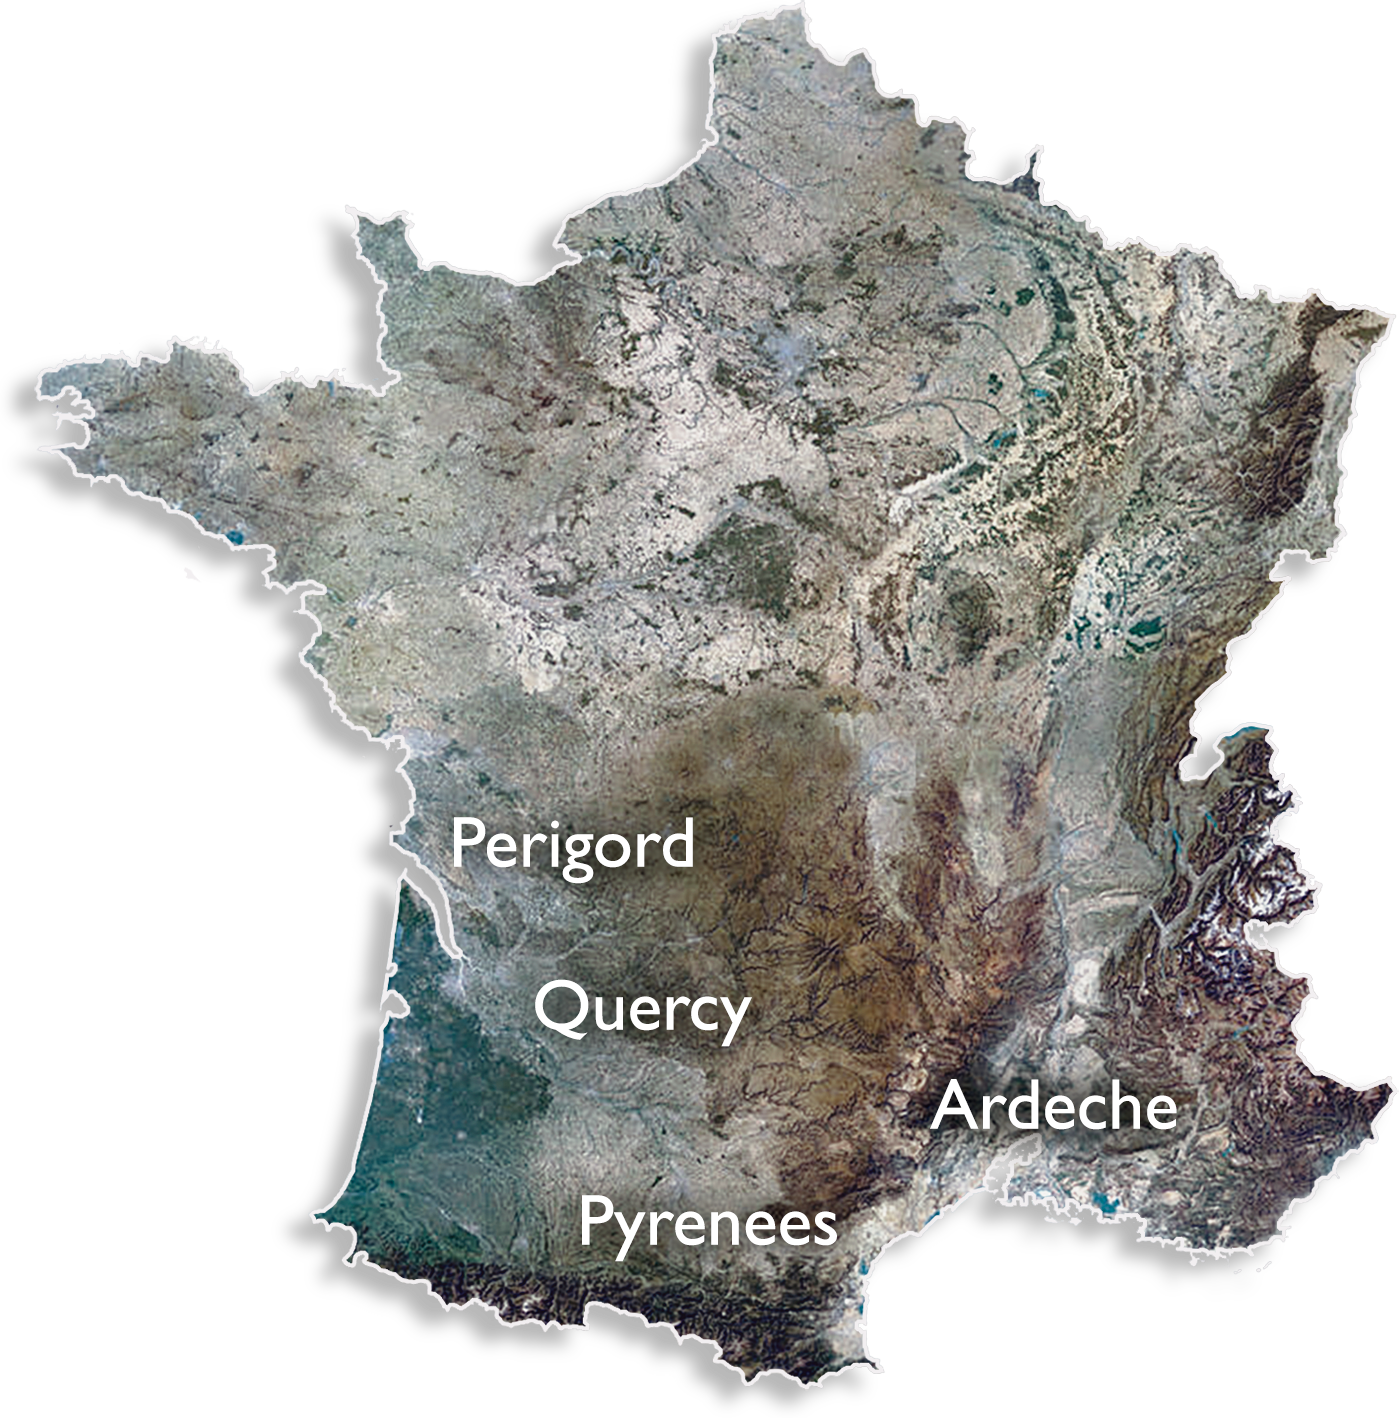 Paleolithic Cave Art of France